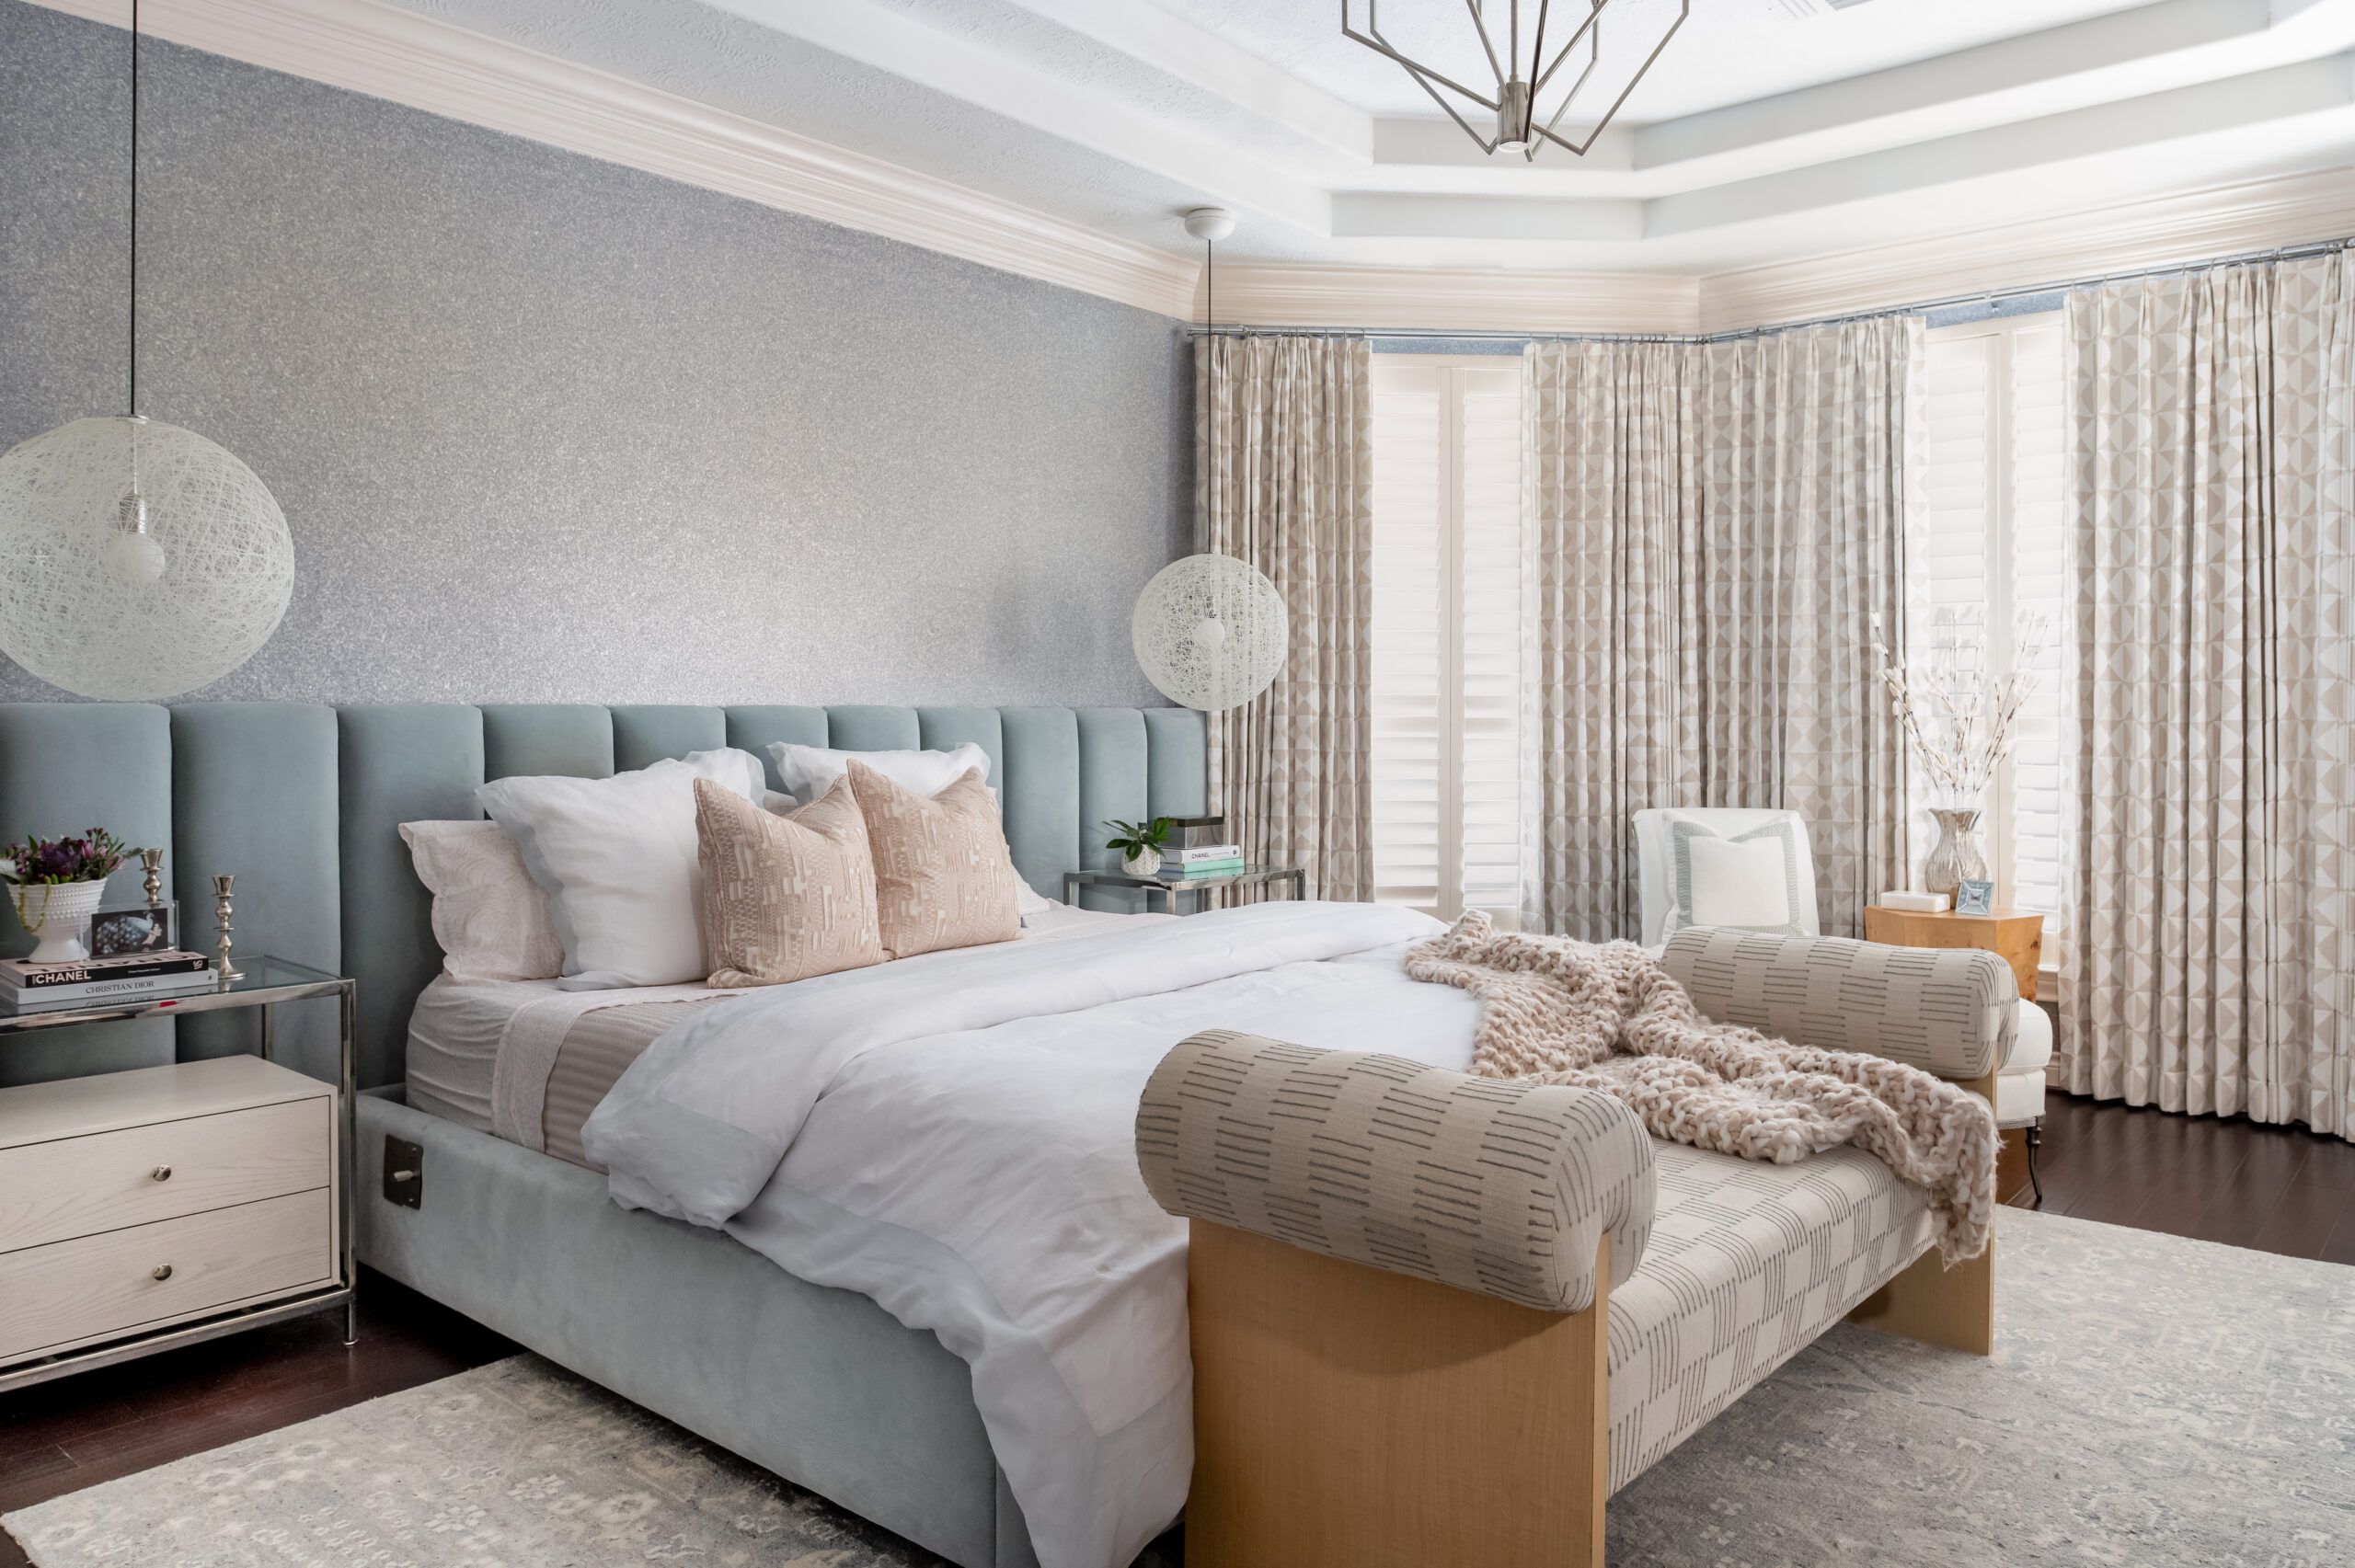 Bright minimalistic bedroom interior design